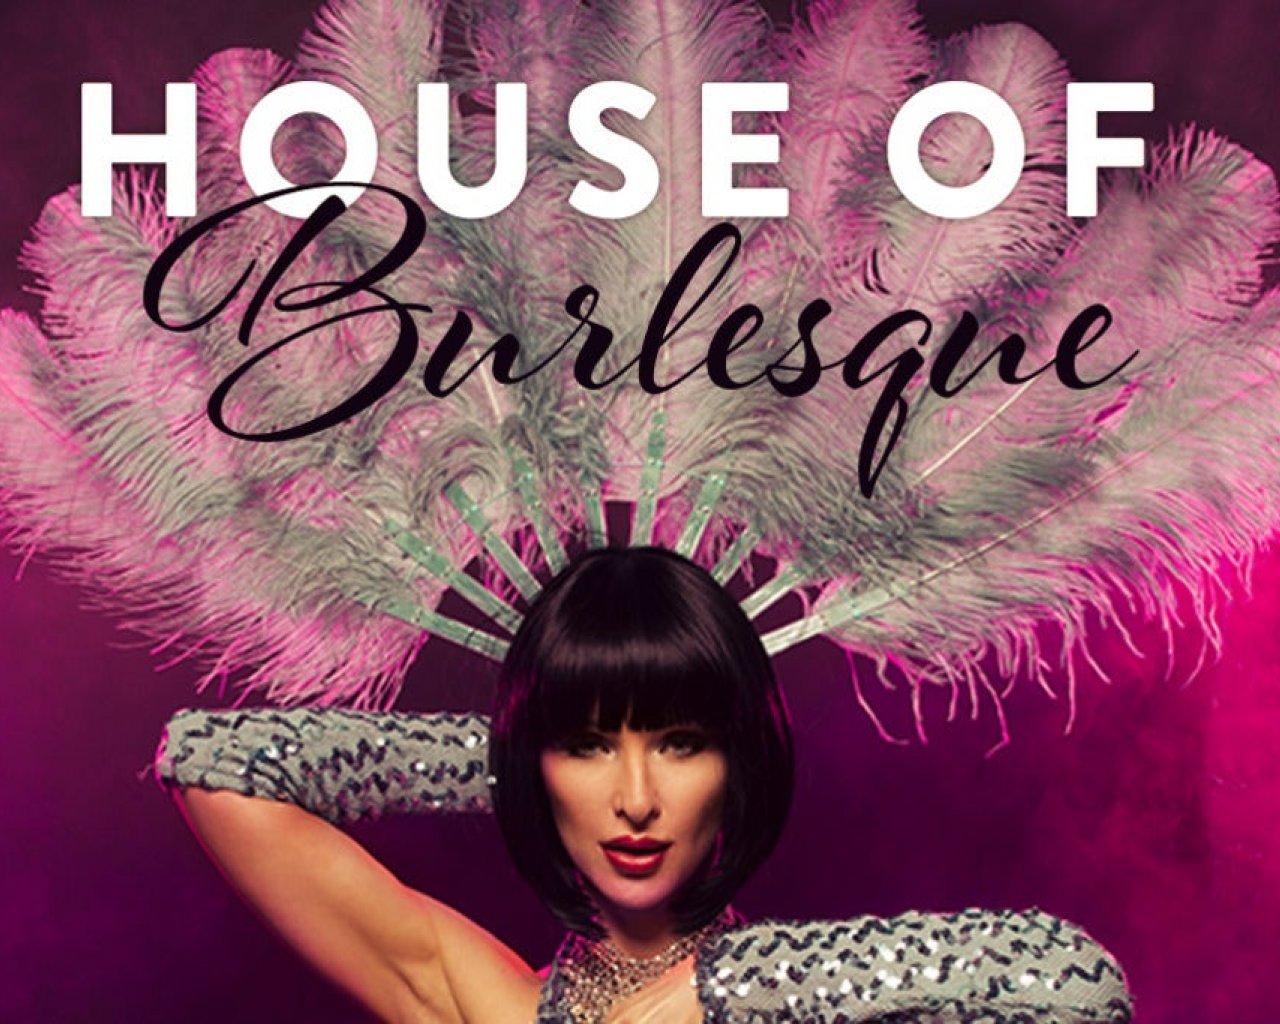 House of Burlesque